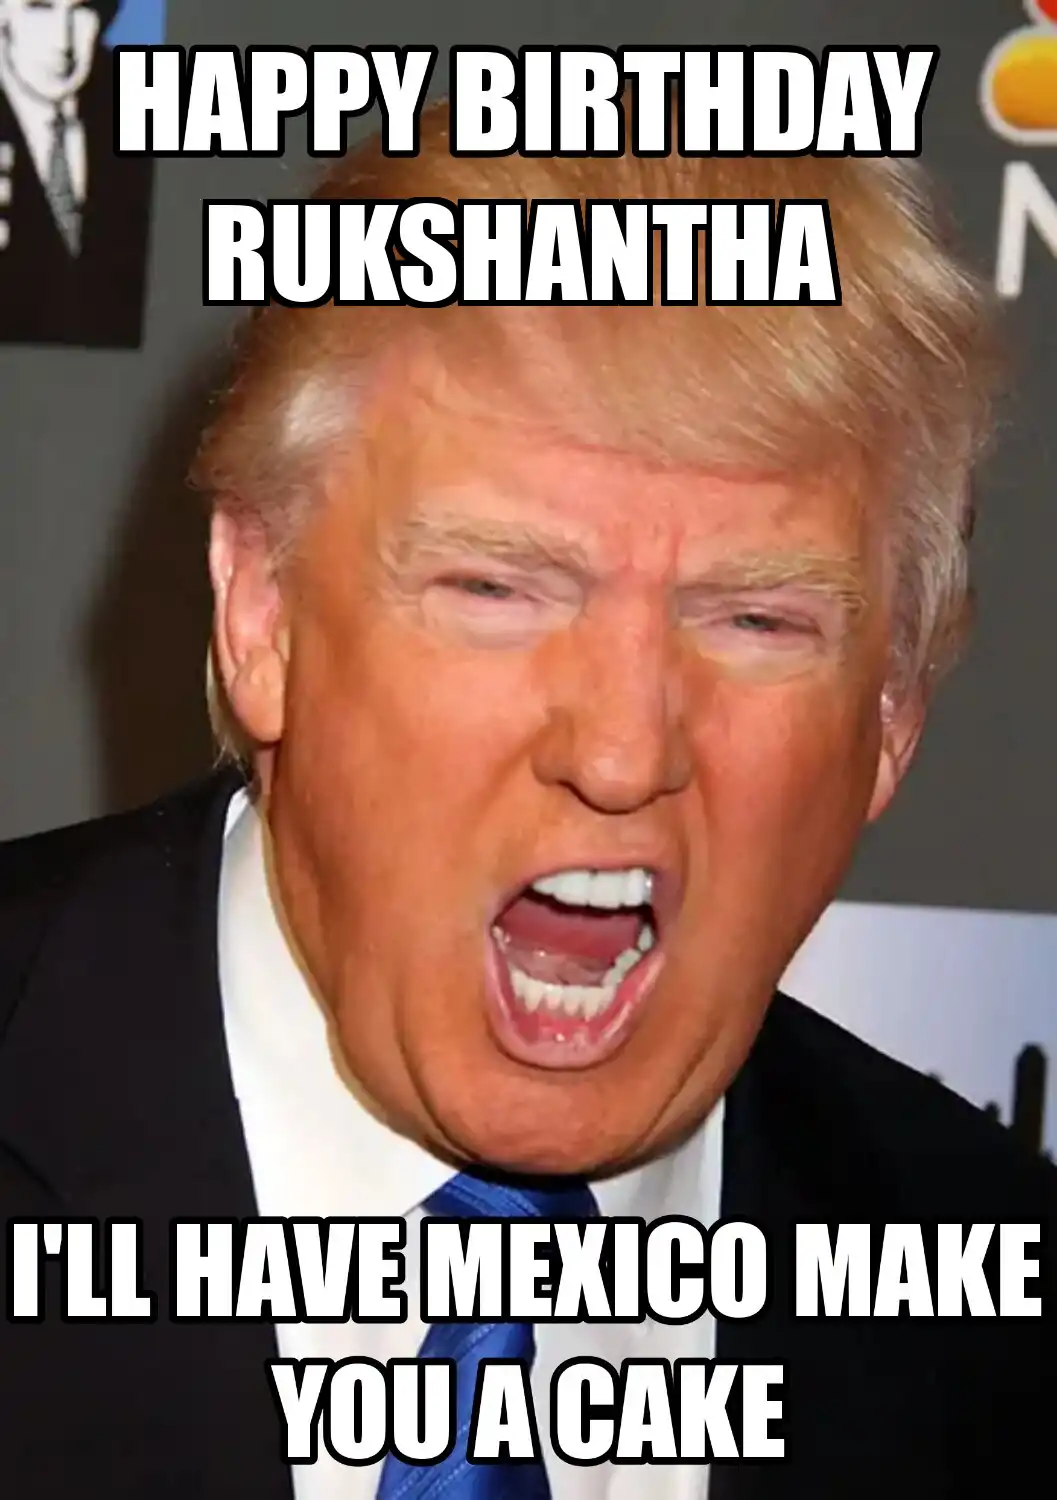 Happy Birthday Rukshantha Mexico Make You A Cake Meme